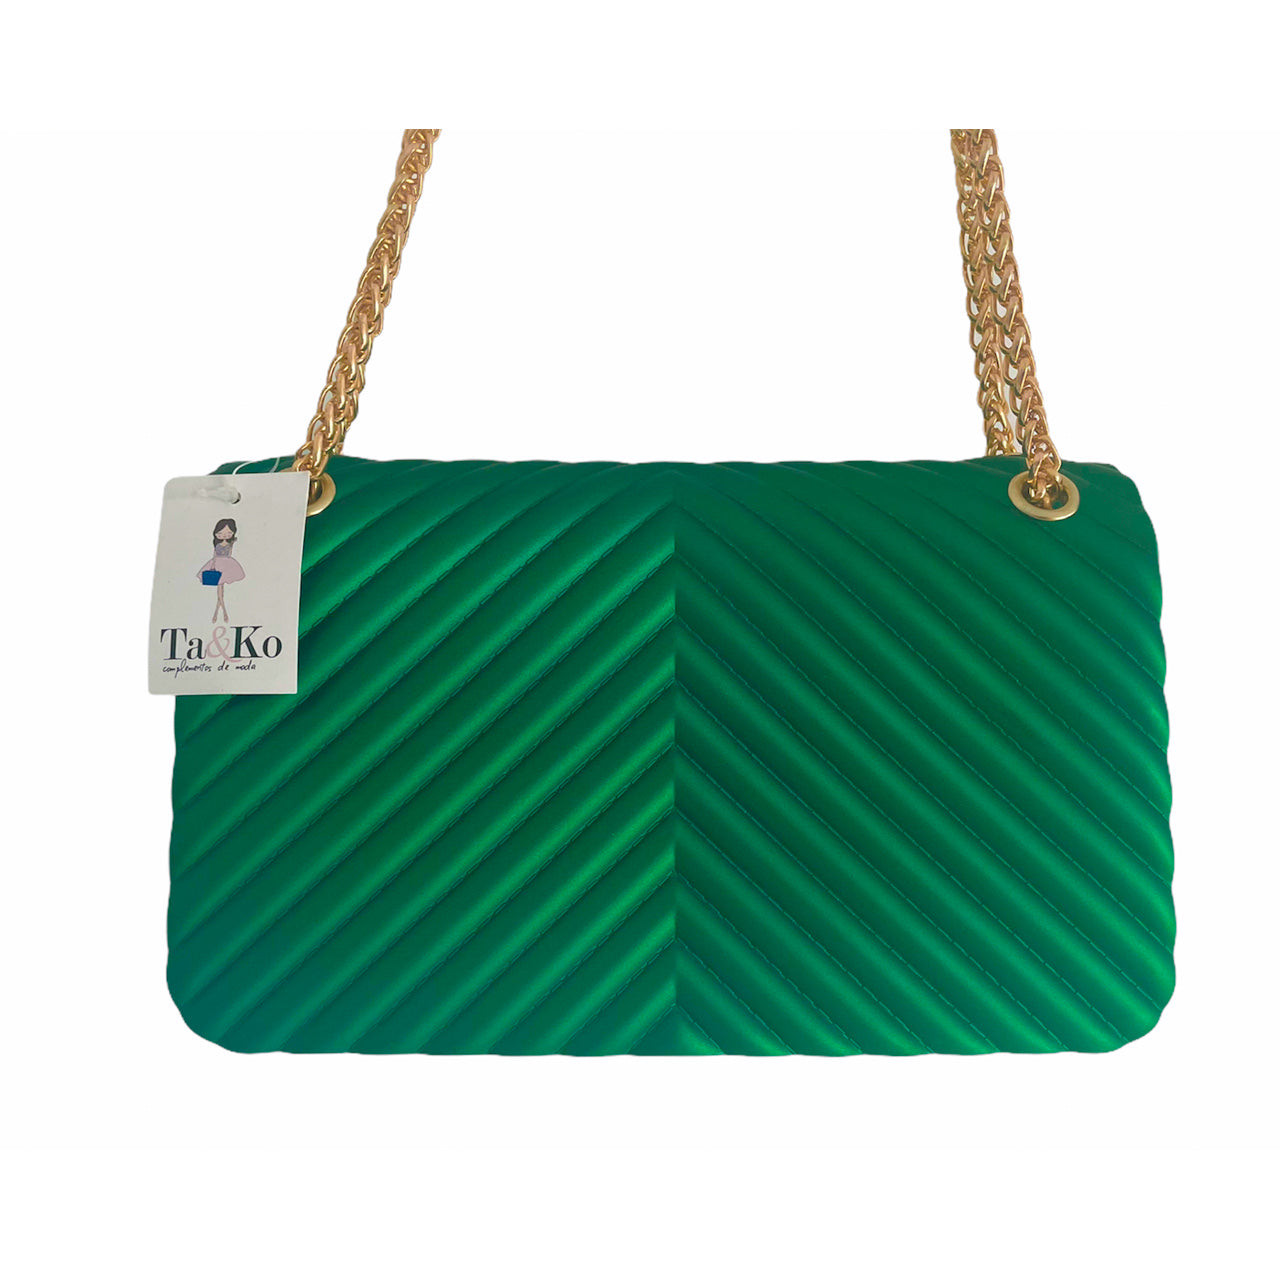 Metallic Green Rubber Bag